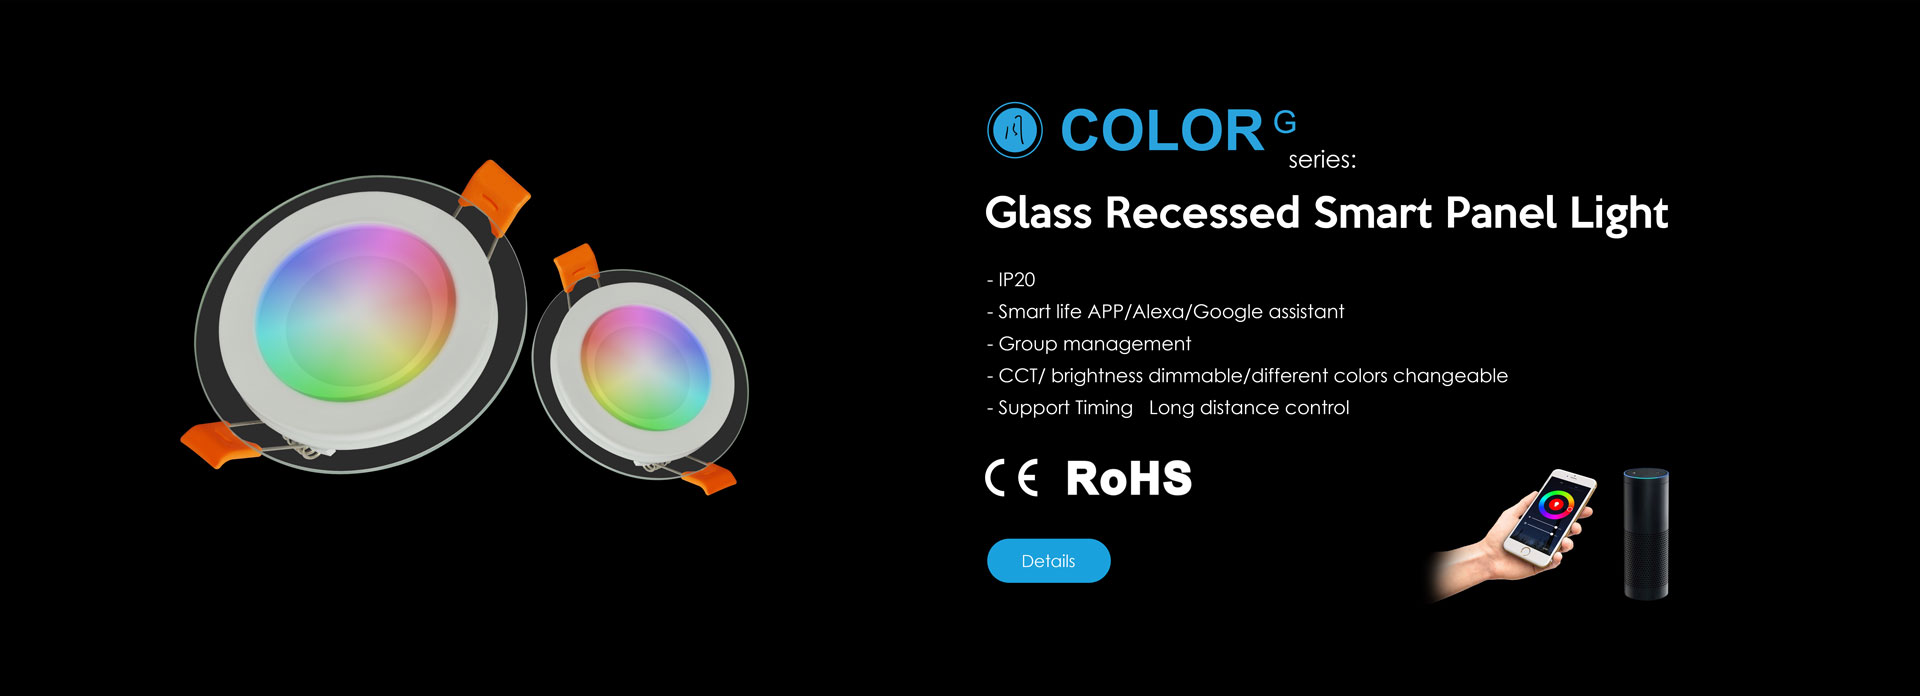 Round Glass Recessed Smart Panel Light